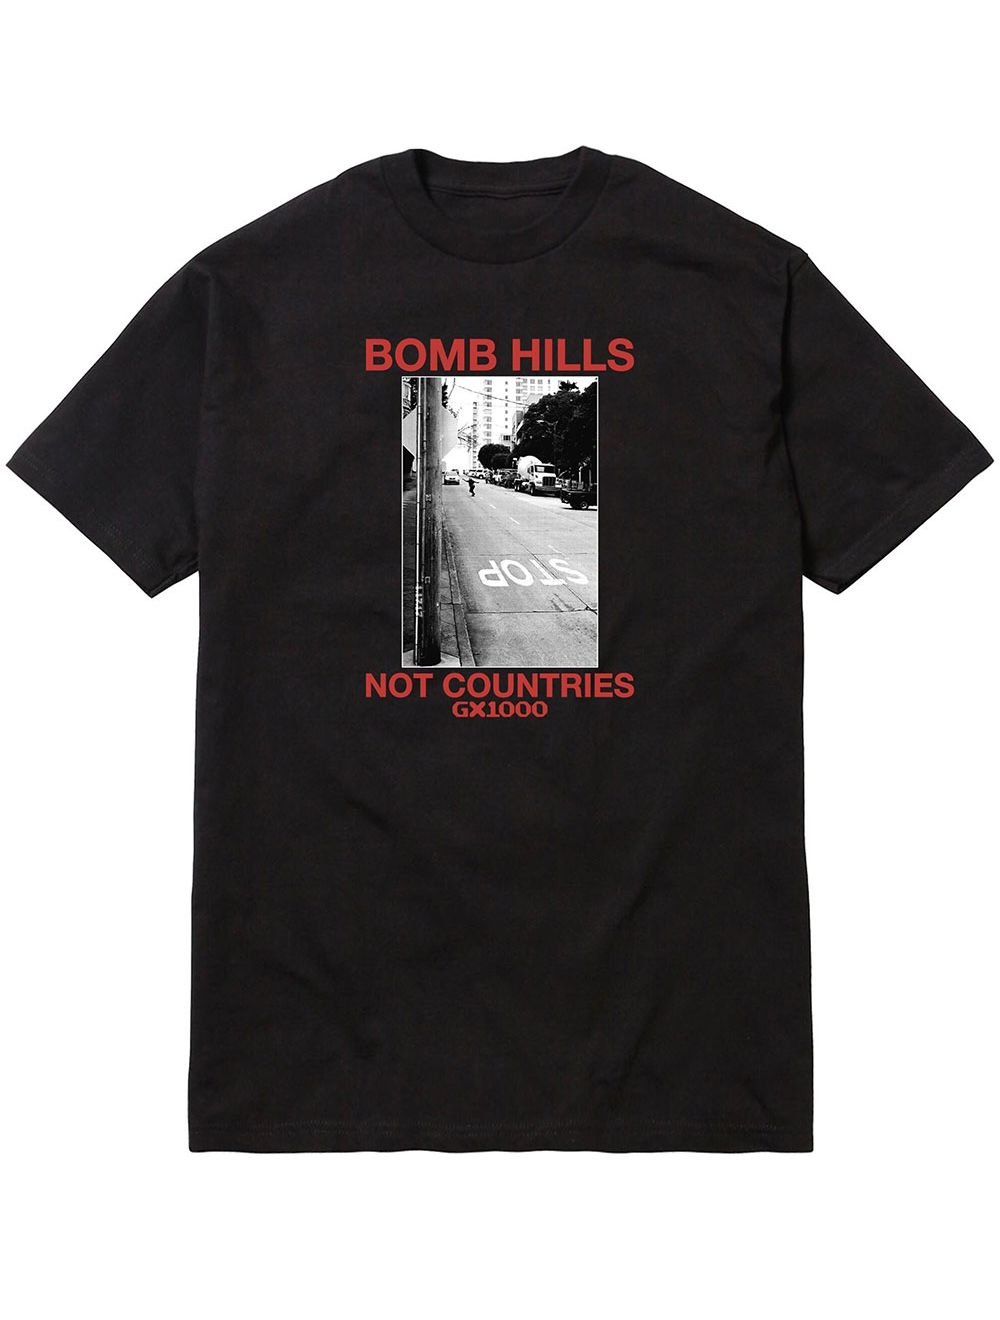 GX1000 Bomb Hills Not Countries Tee - Black/Red